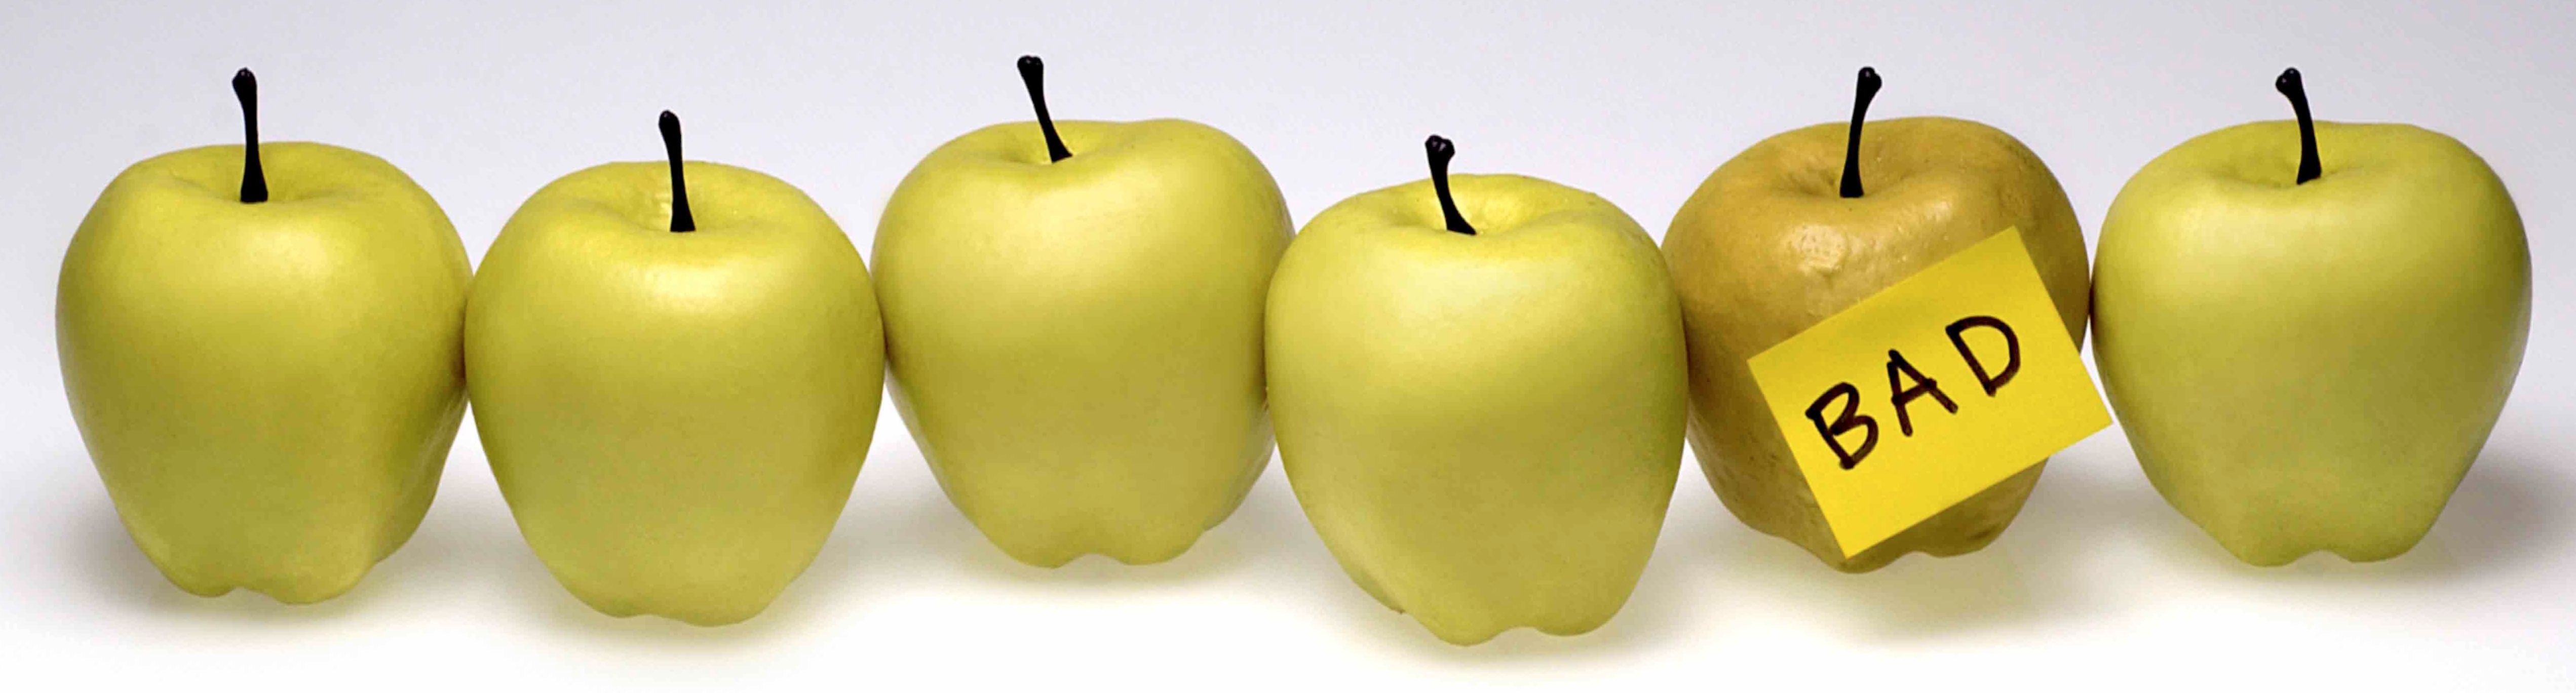 bad-apples1.jpg